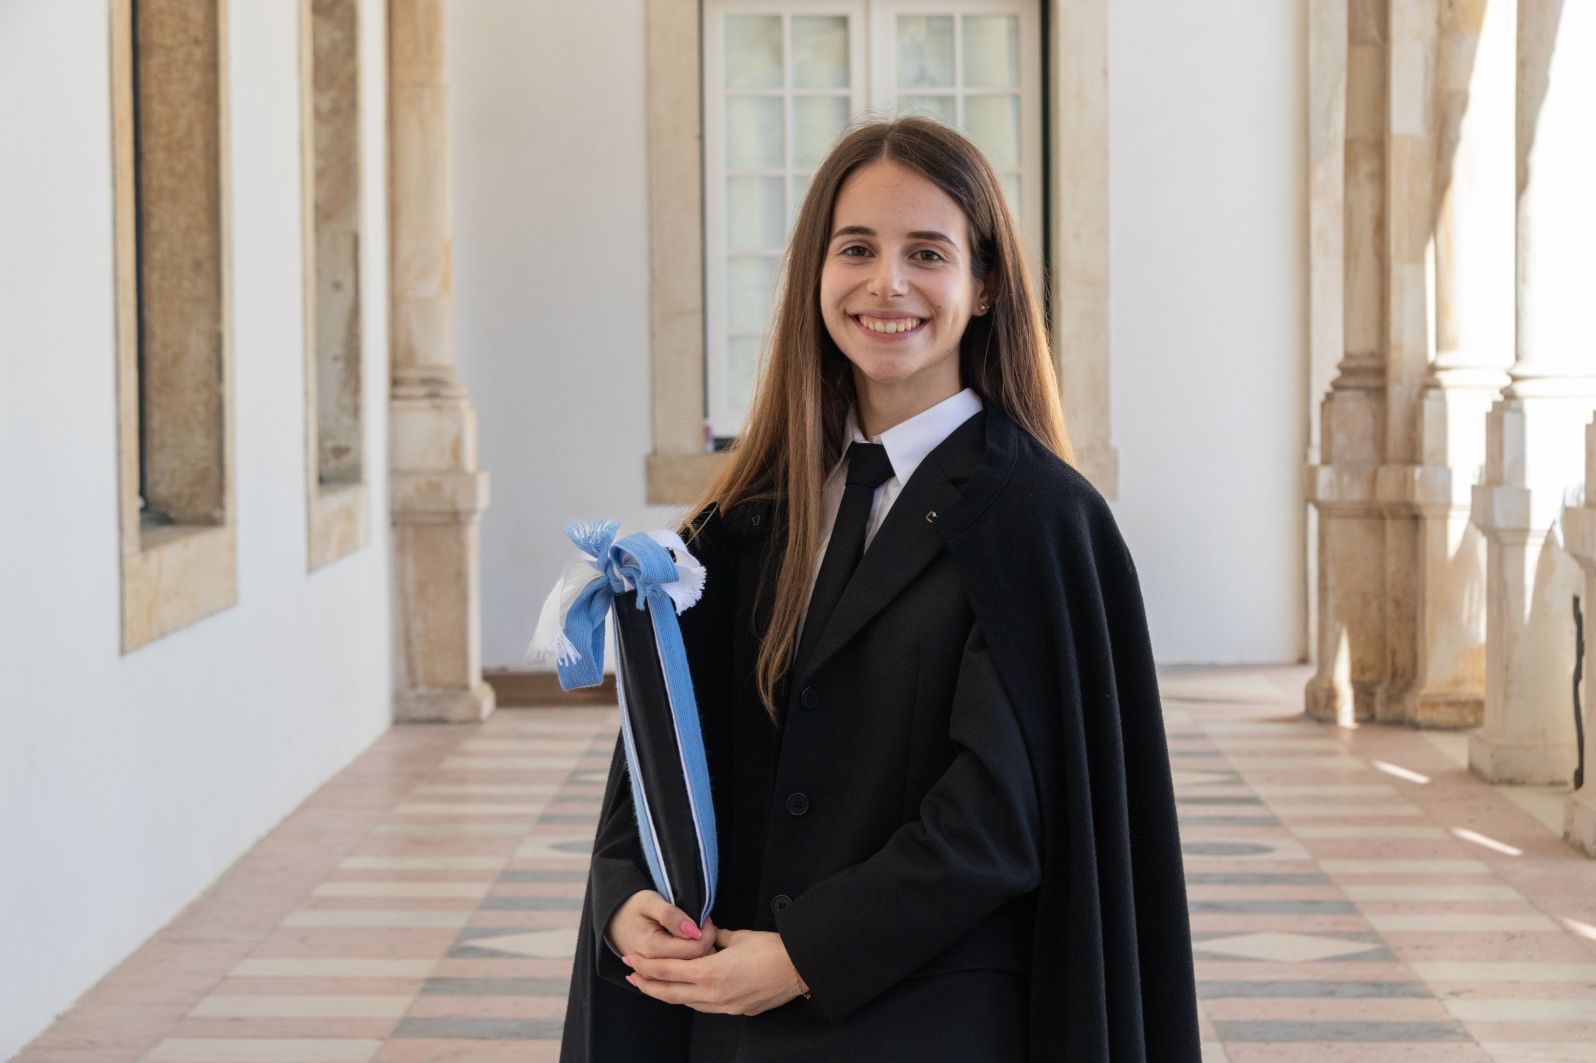 Aluna da Universidade de Coimbra ganha bolsa de mérito da E-Redes para futuras engenheiras